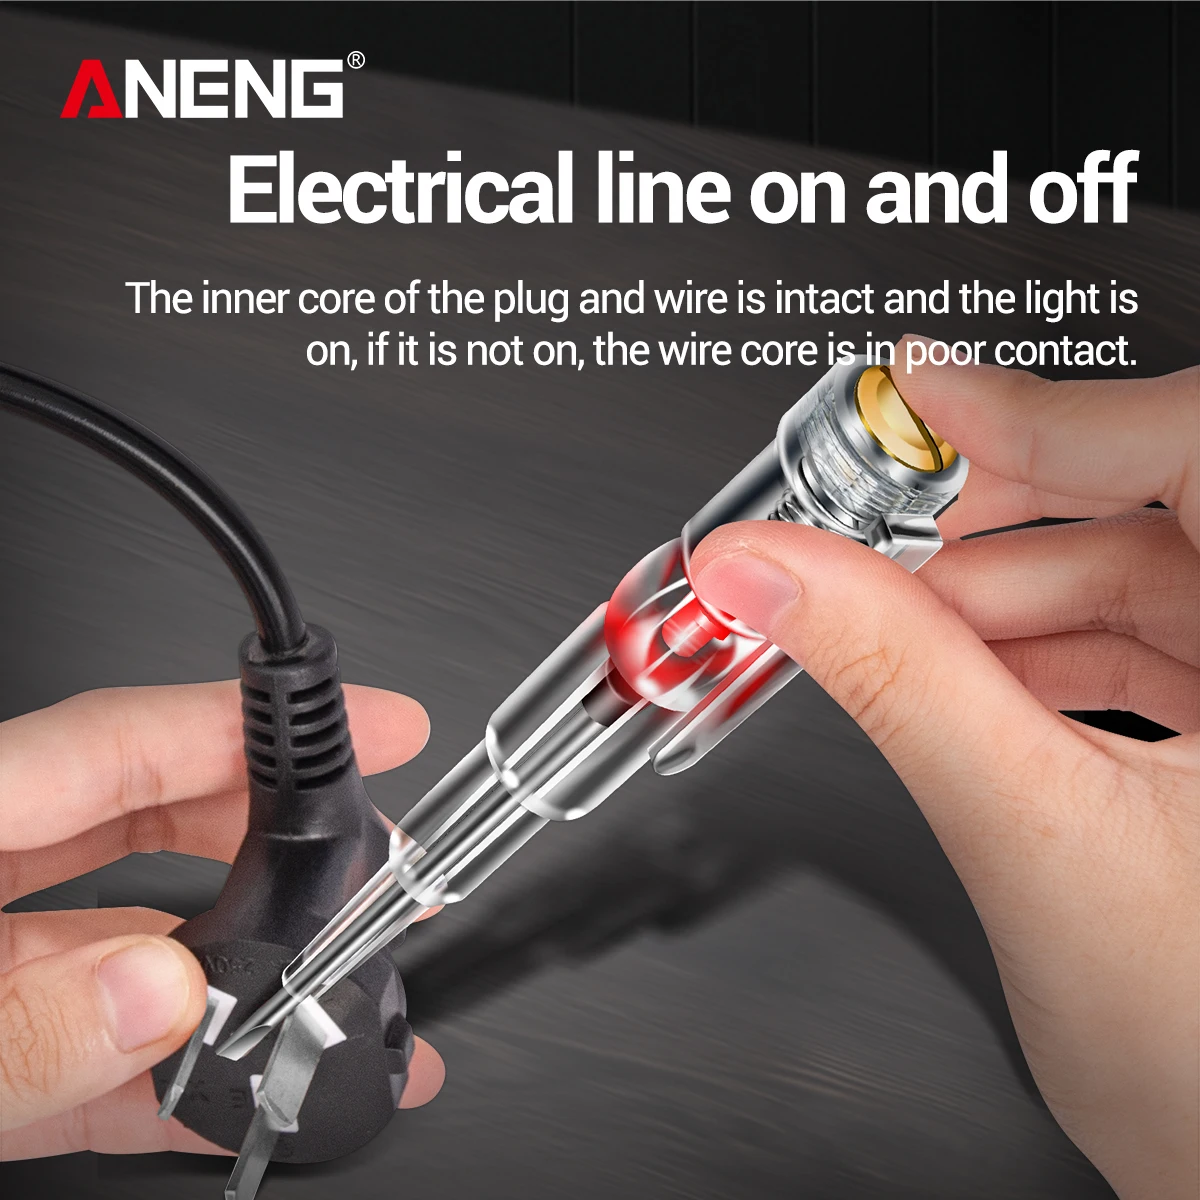 

ANENG B09 voltimetro amperimetro digital tester electric Induced Electric Screwdriver Probe With Indicator Light Test pen Sensor